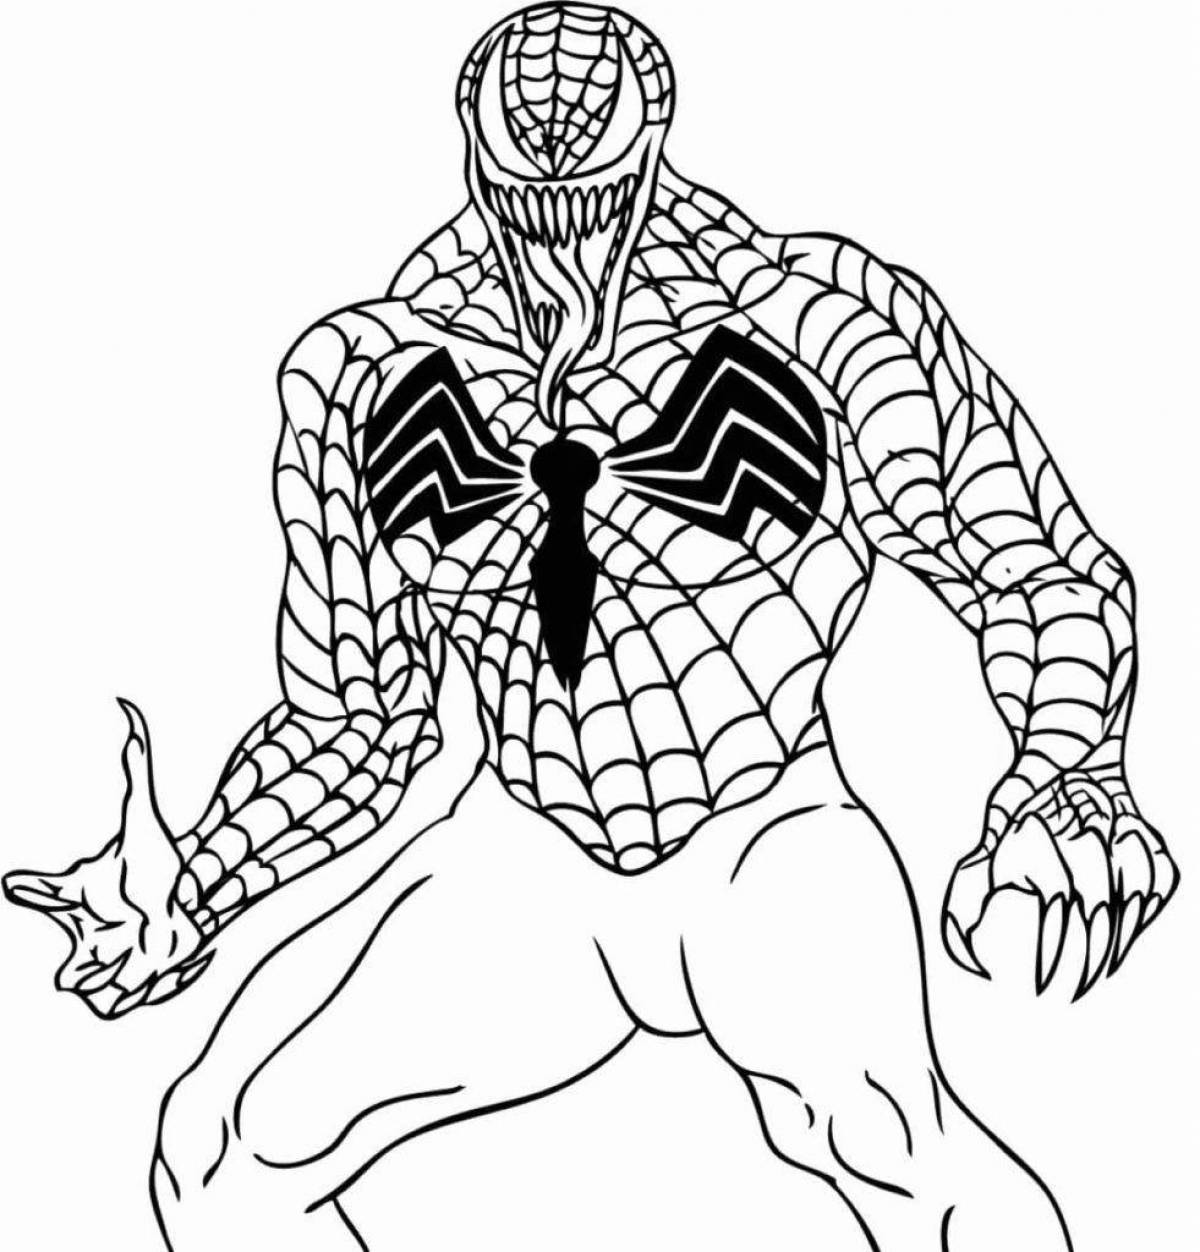 Spider-Man and Venom amazing coloring book